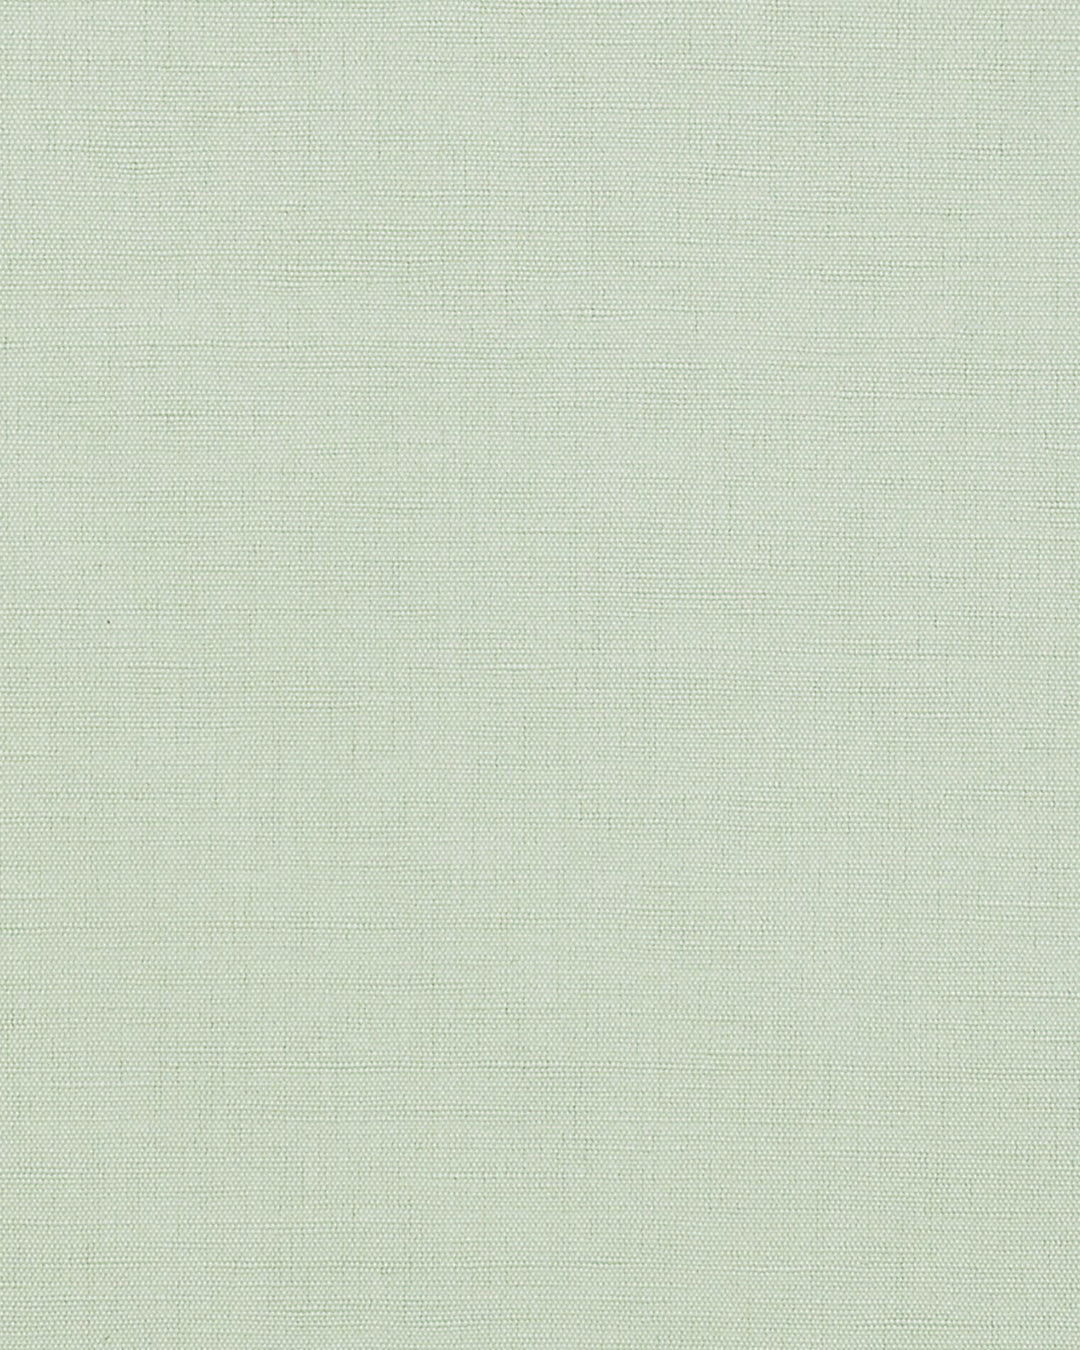 Gurkha Pants in Pale Green Cotton Canvas Linen